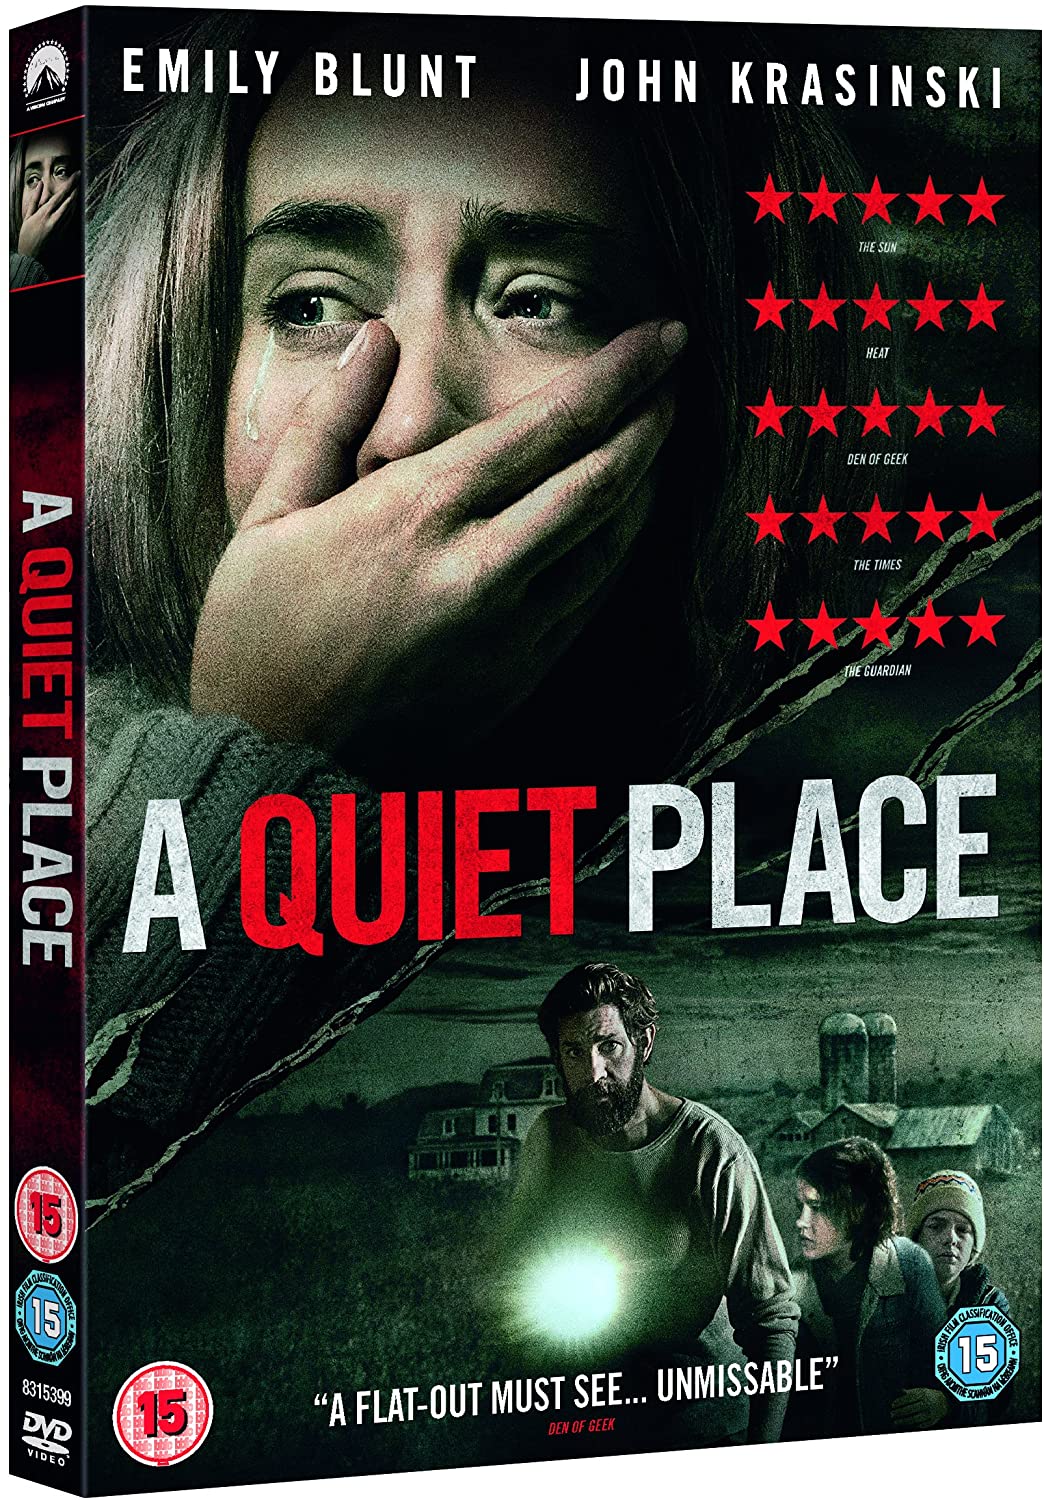 A Quiet Place [2018] - Horror/Sci-fi [DVD]